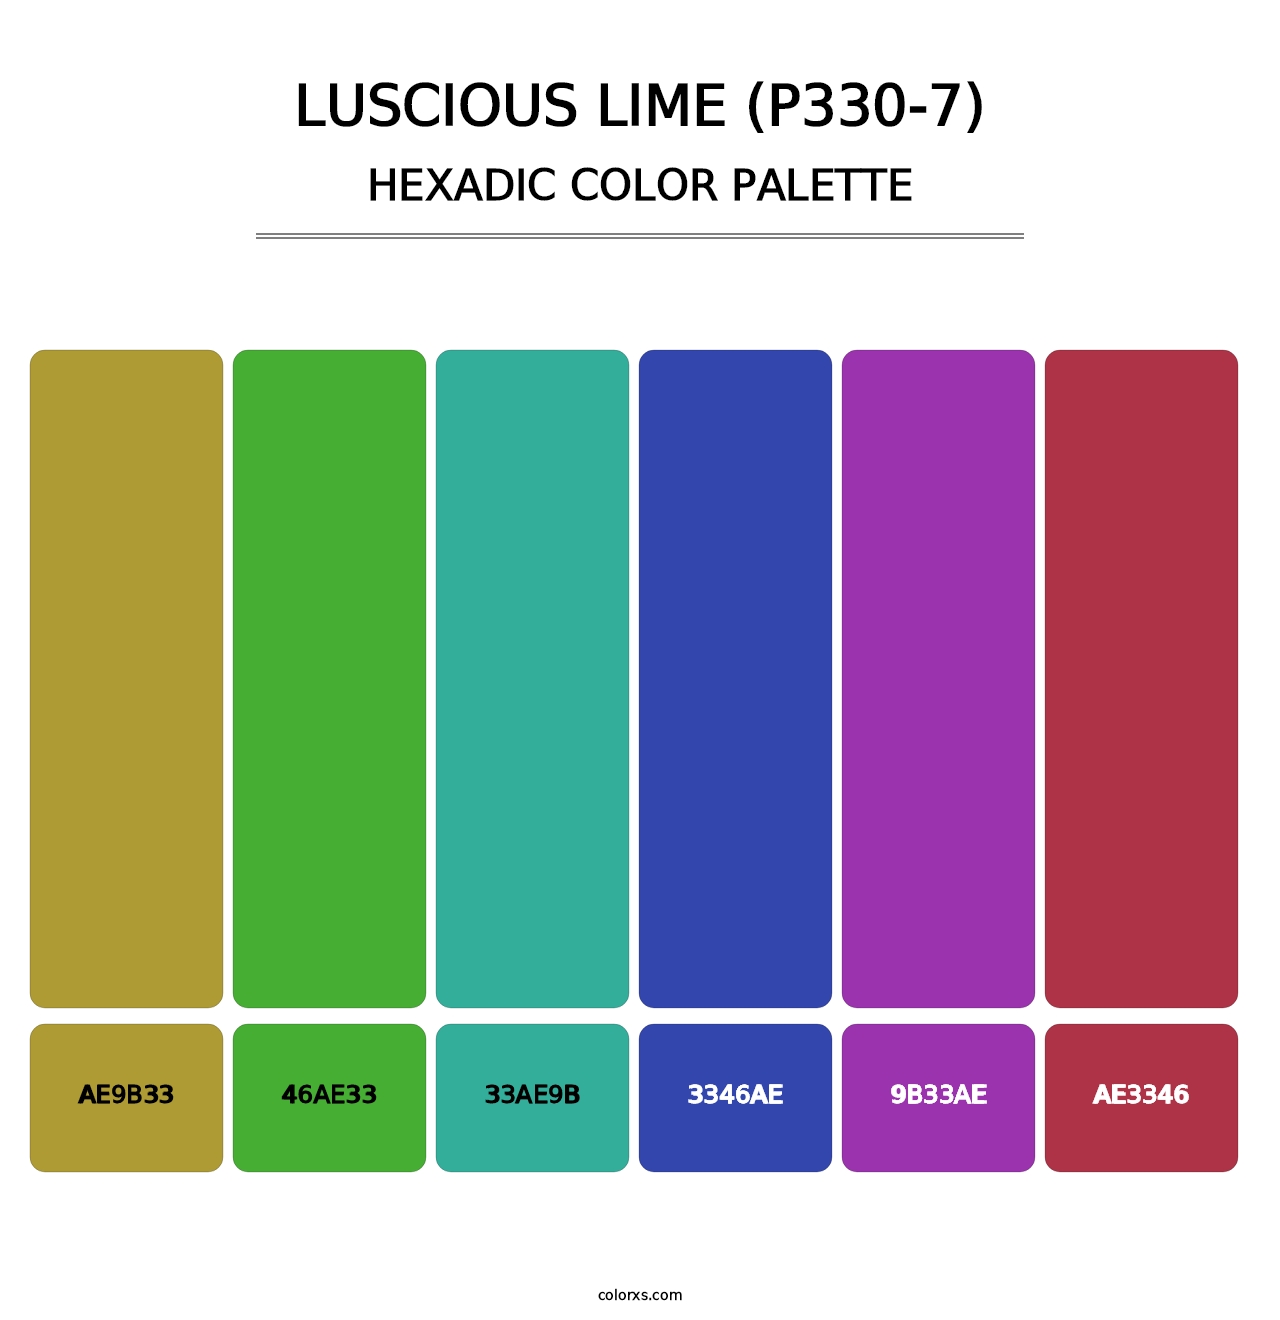 Luscious Lime (P330-7) - Hexadic Color Palette